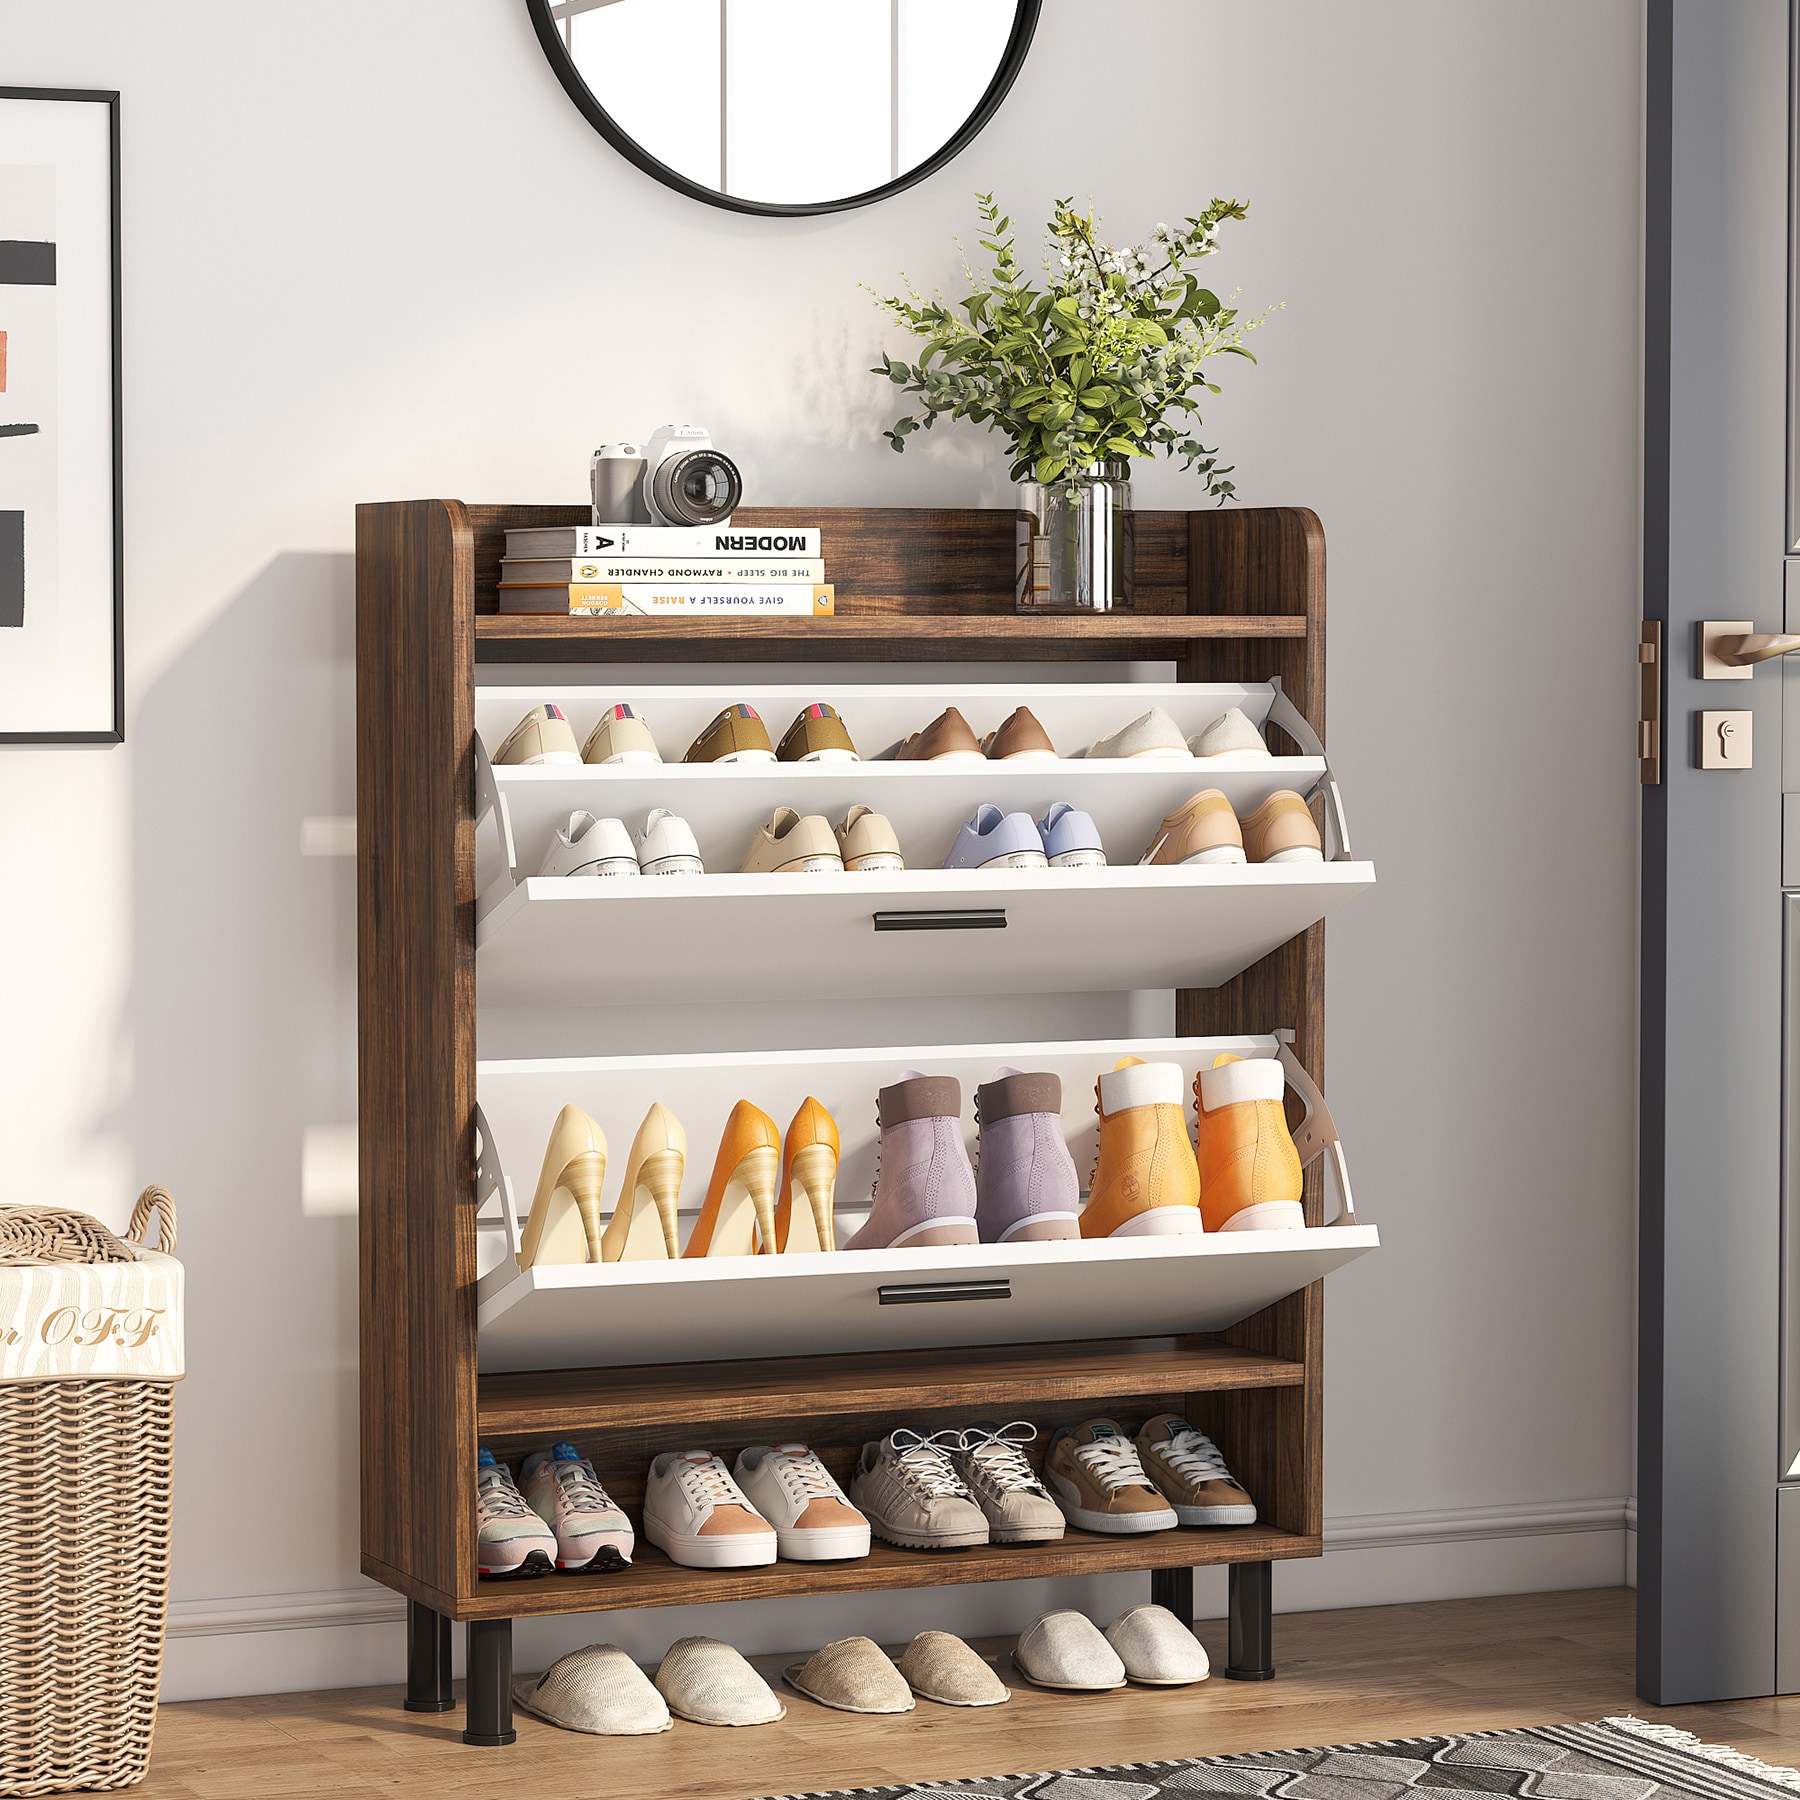  Lamerge Shoe Cabinet for Entryway, Modern Shoe Storage